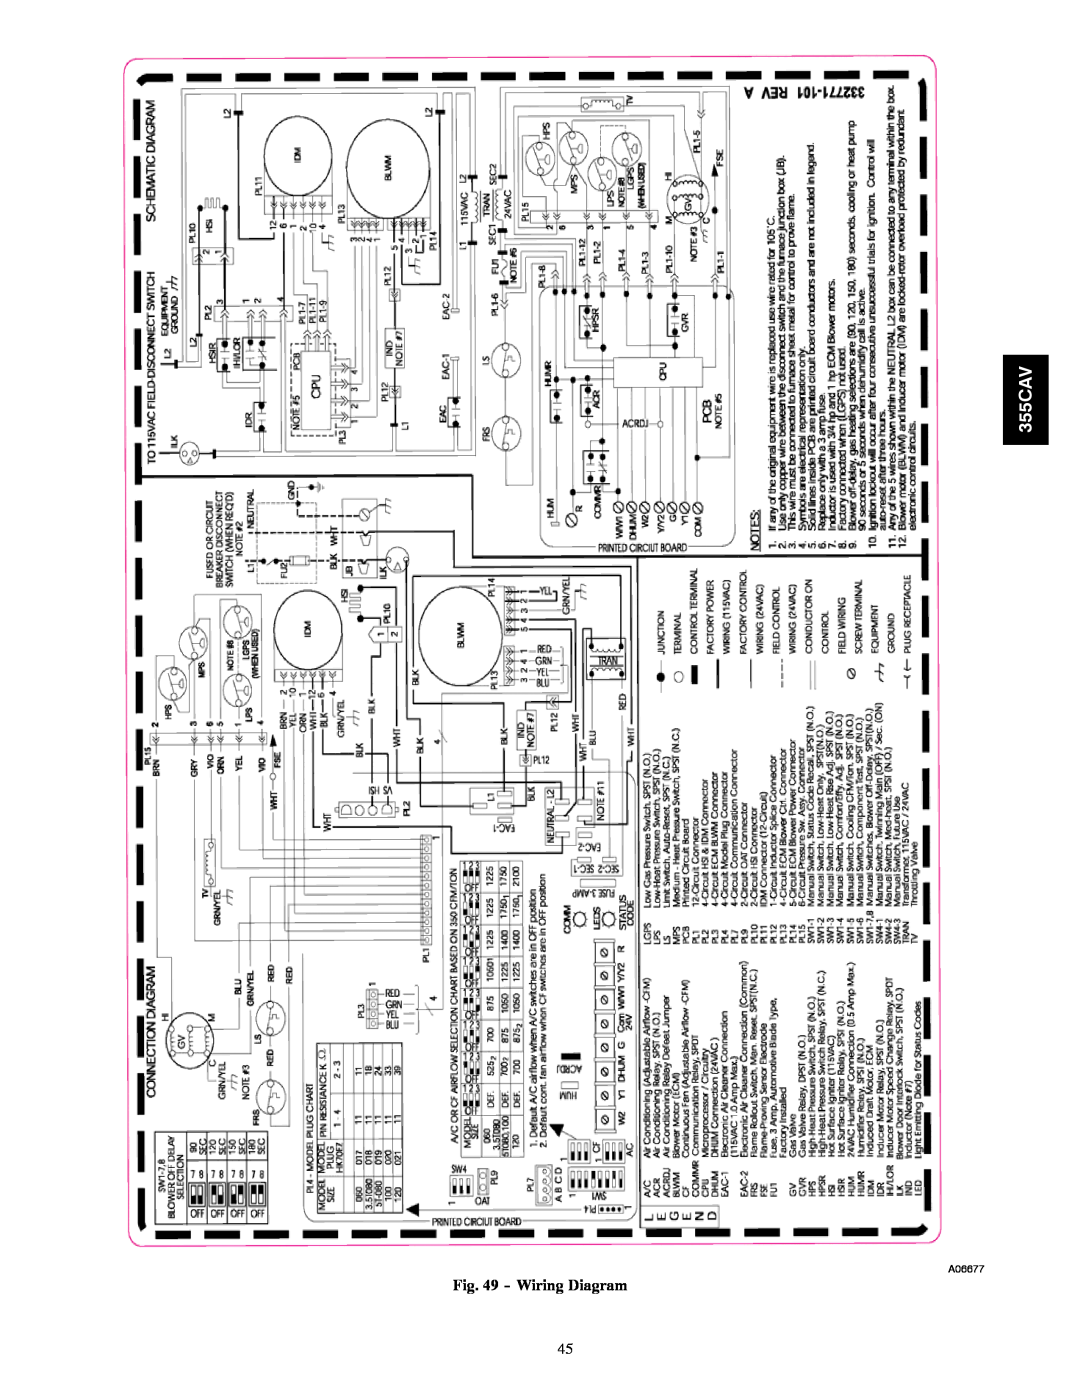 Bryant 355CAV installation instructions Wiring Diagram, A06677 